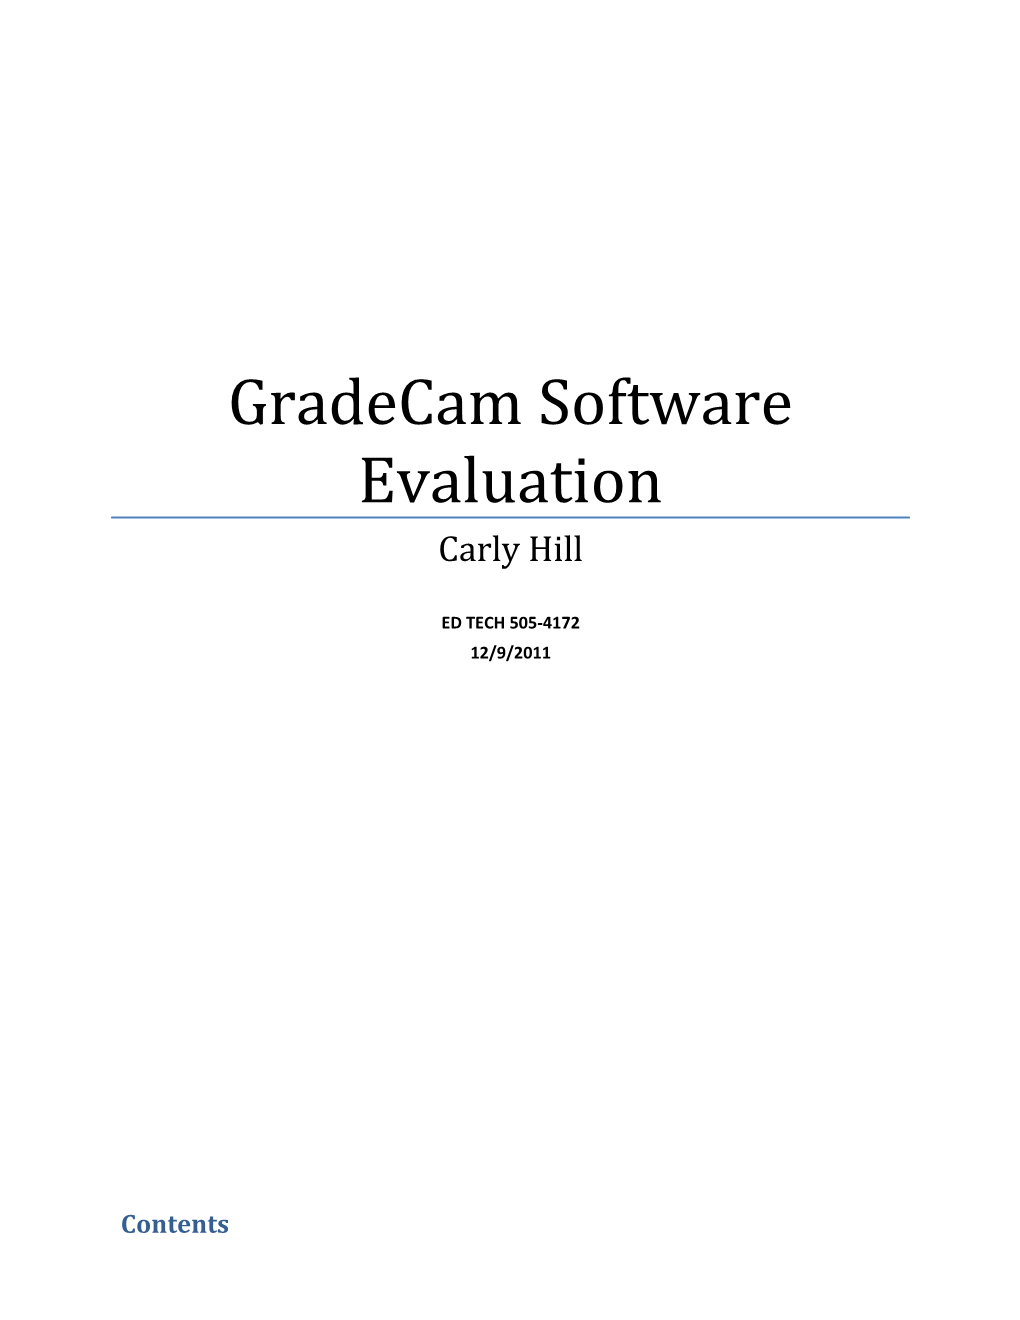 Gradecam Software Evaluation